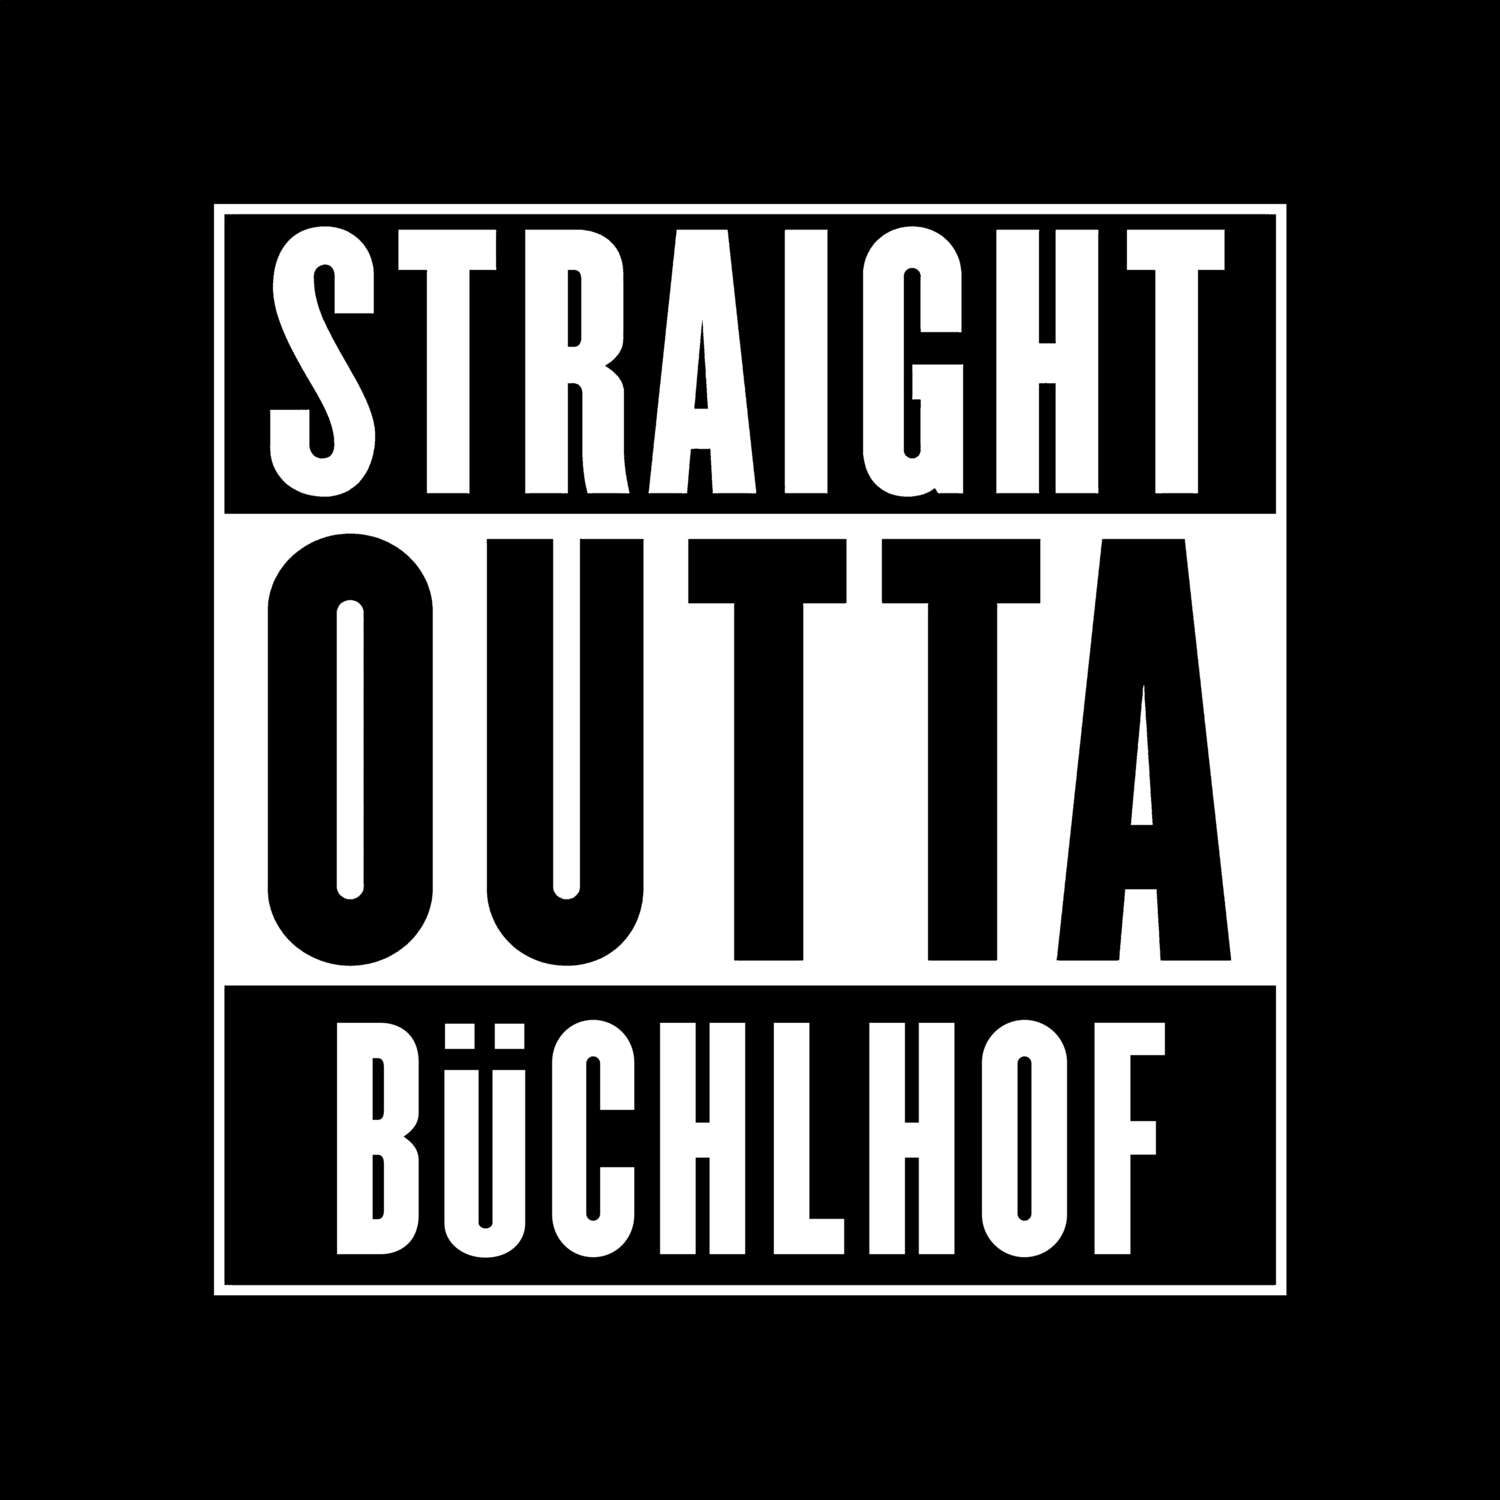 Büchlhof T-Shirt »Straight Outta«